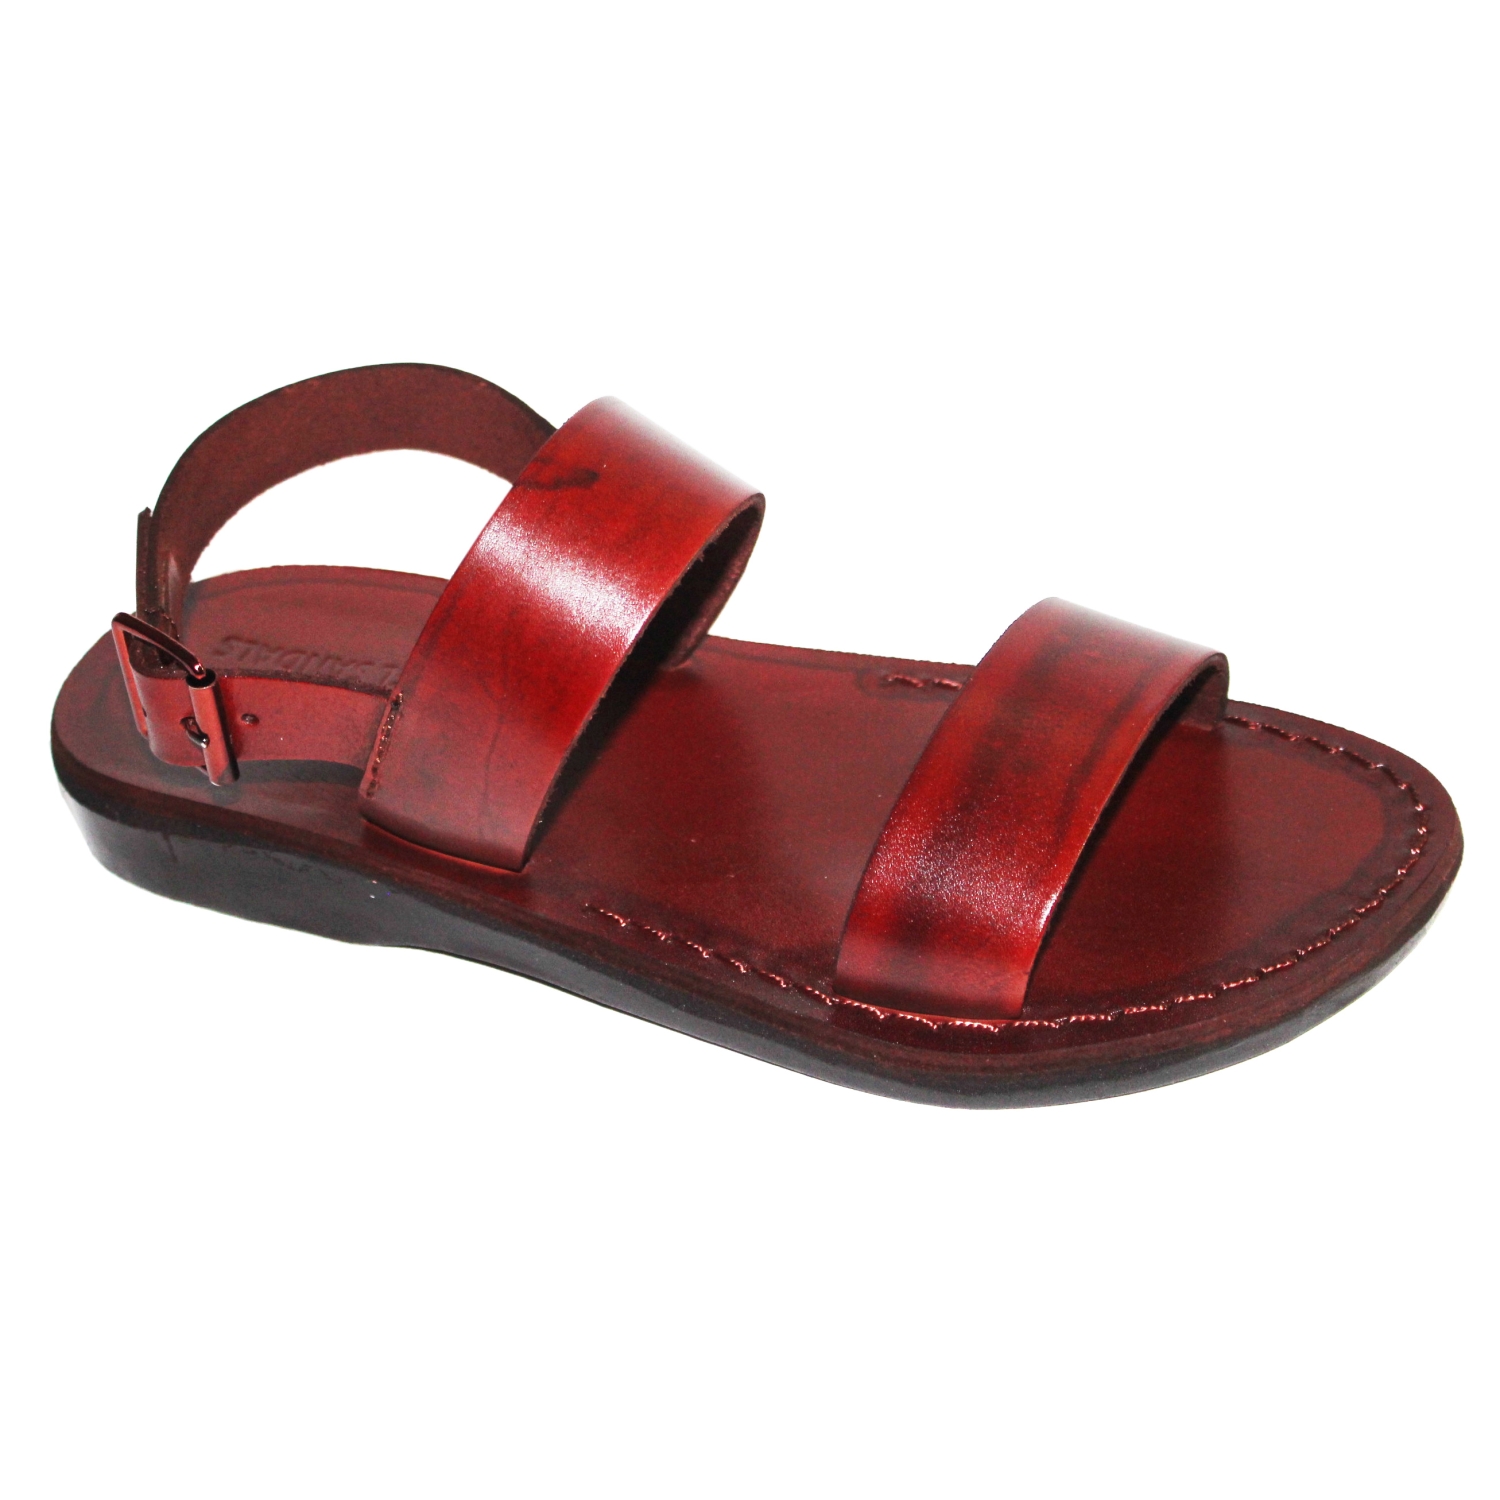 Raffa Handmade Leather Sandals - 1